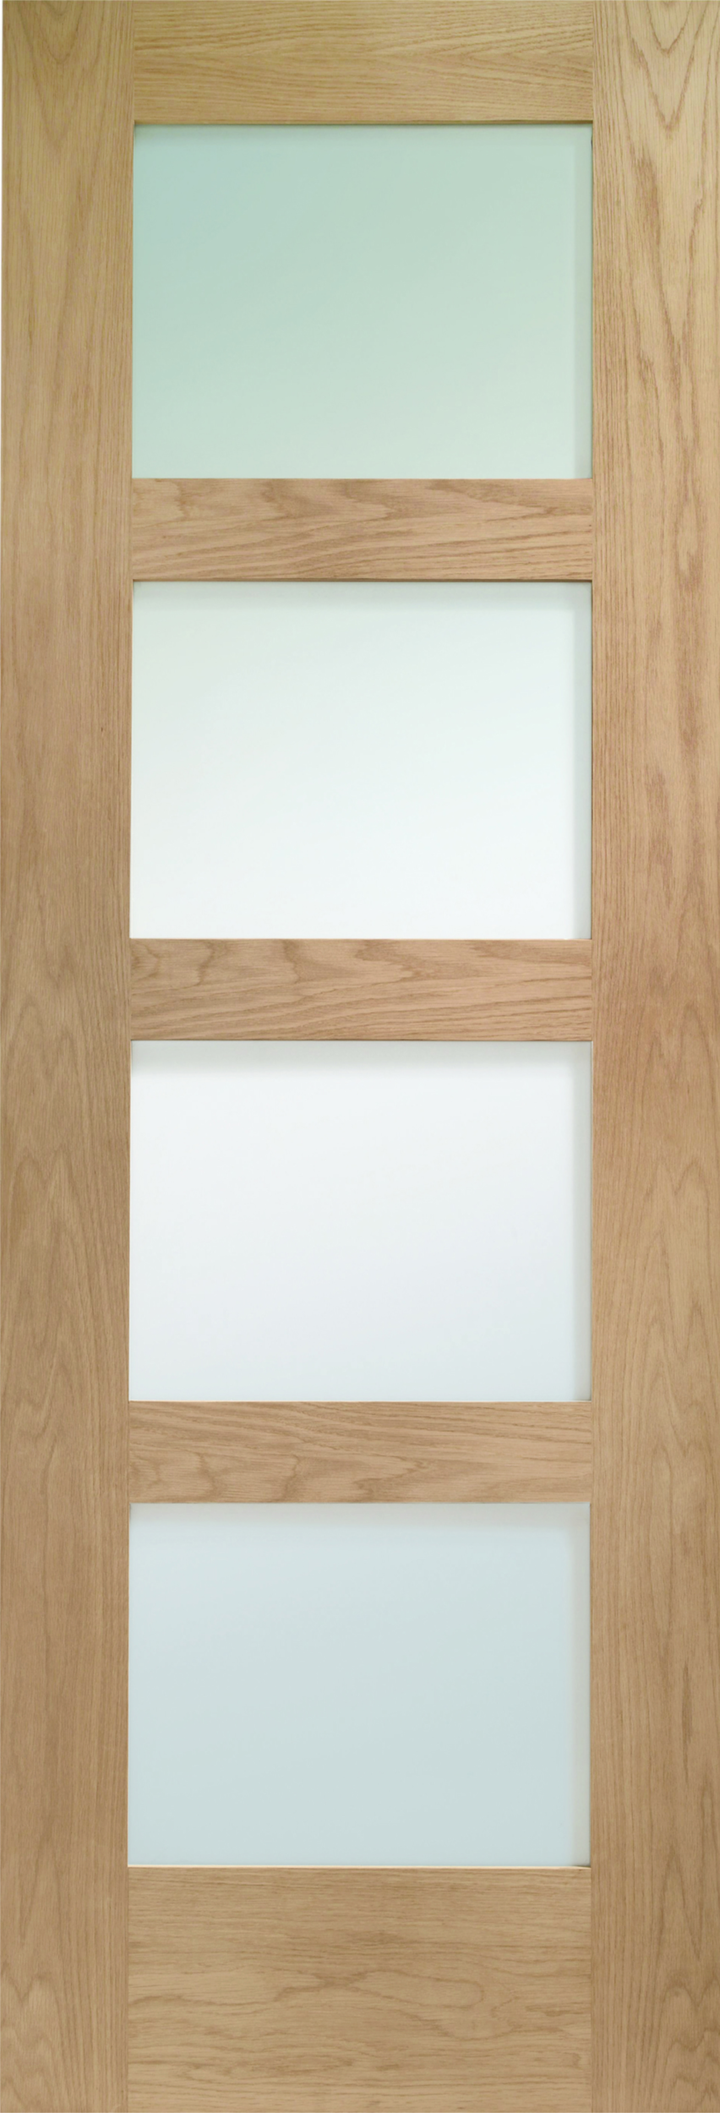 Oak Shaker 4 Light Room Divider with Matching Side Panels 